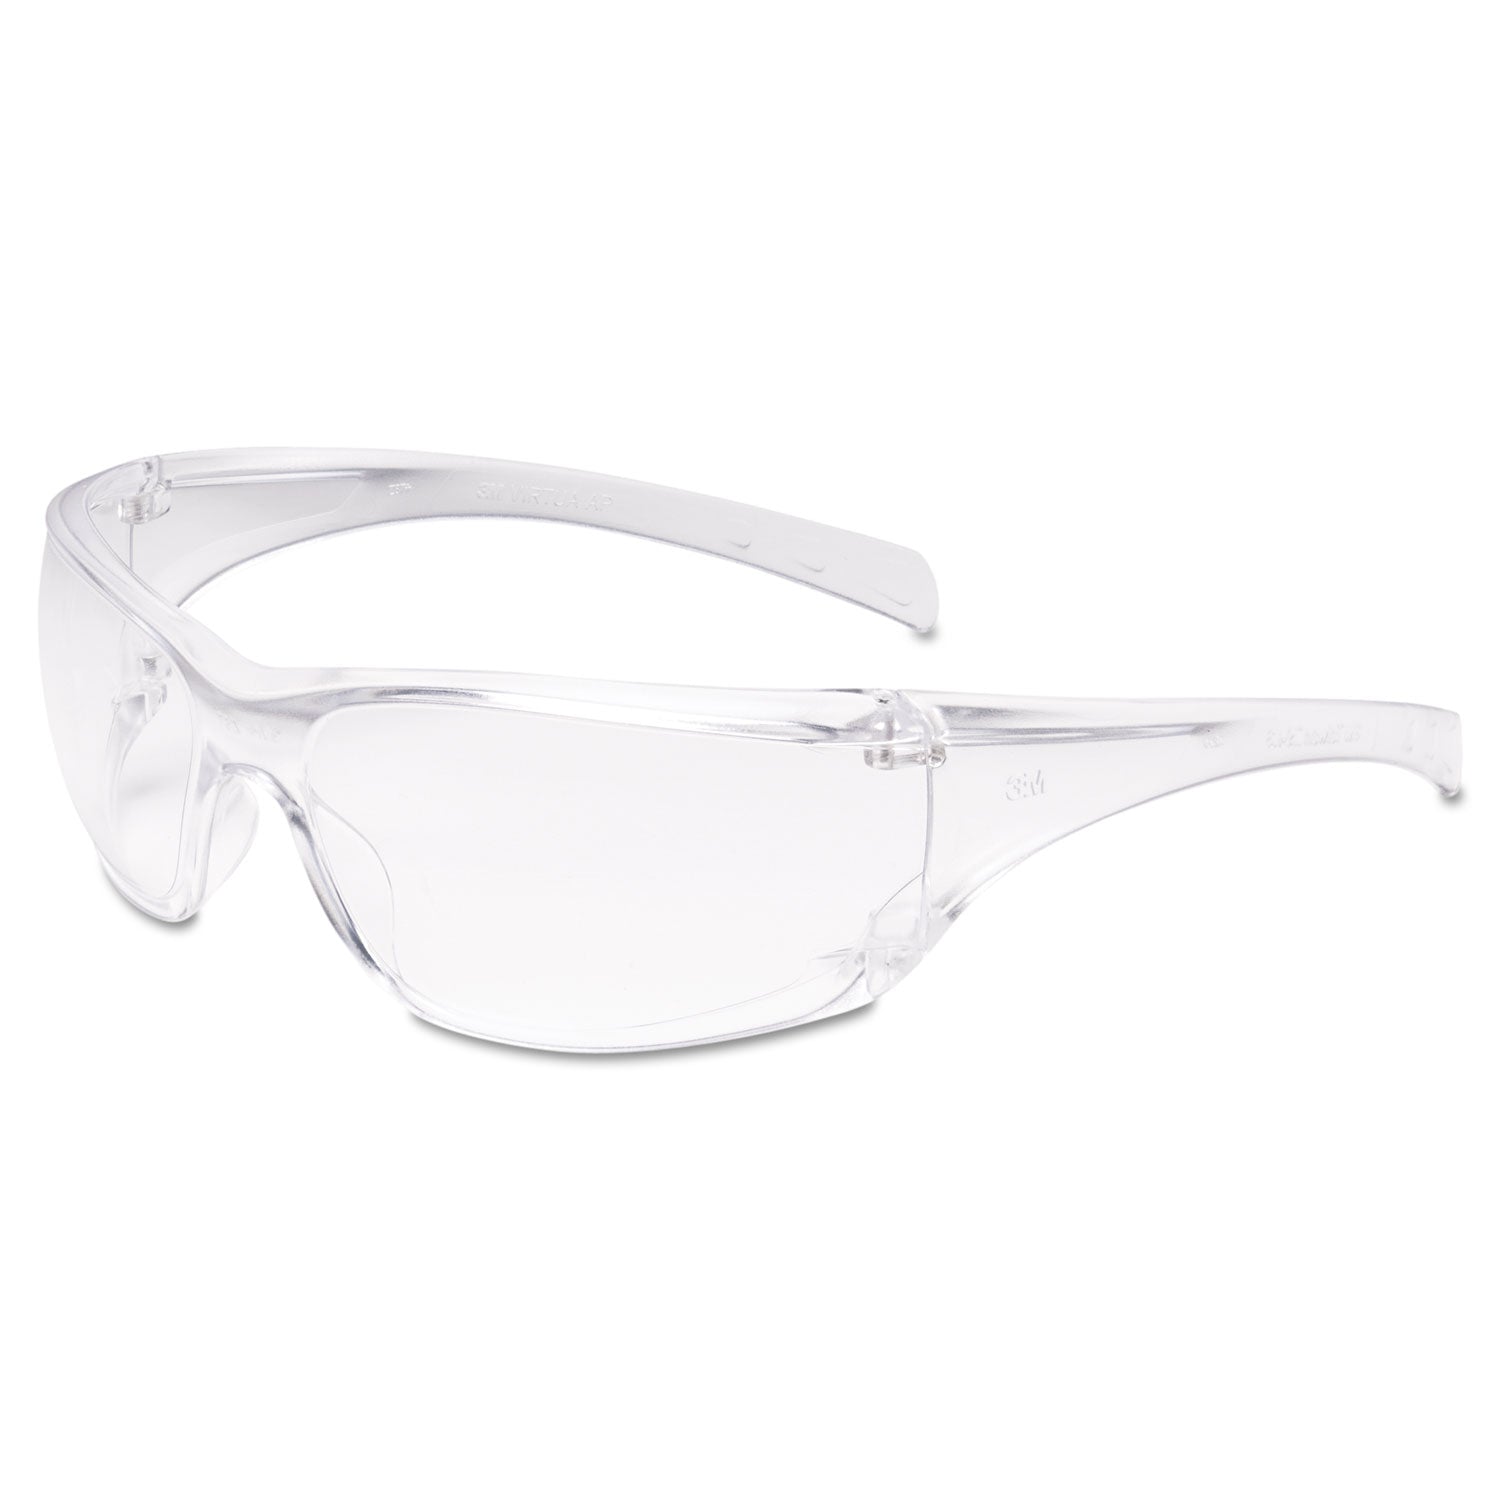 Virtua AP Protective Eyewear, Clear Frame and Lens, 20/Carton - 